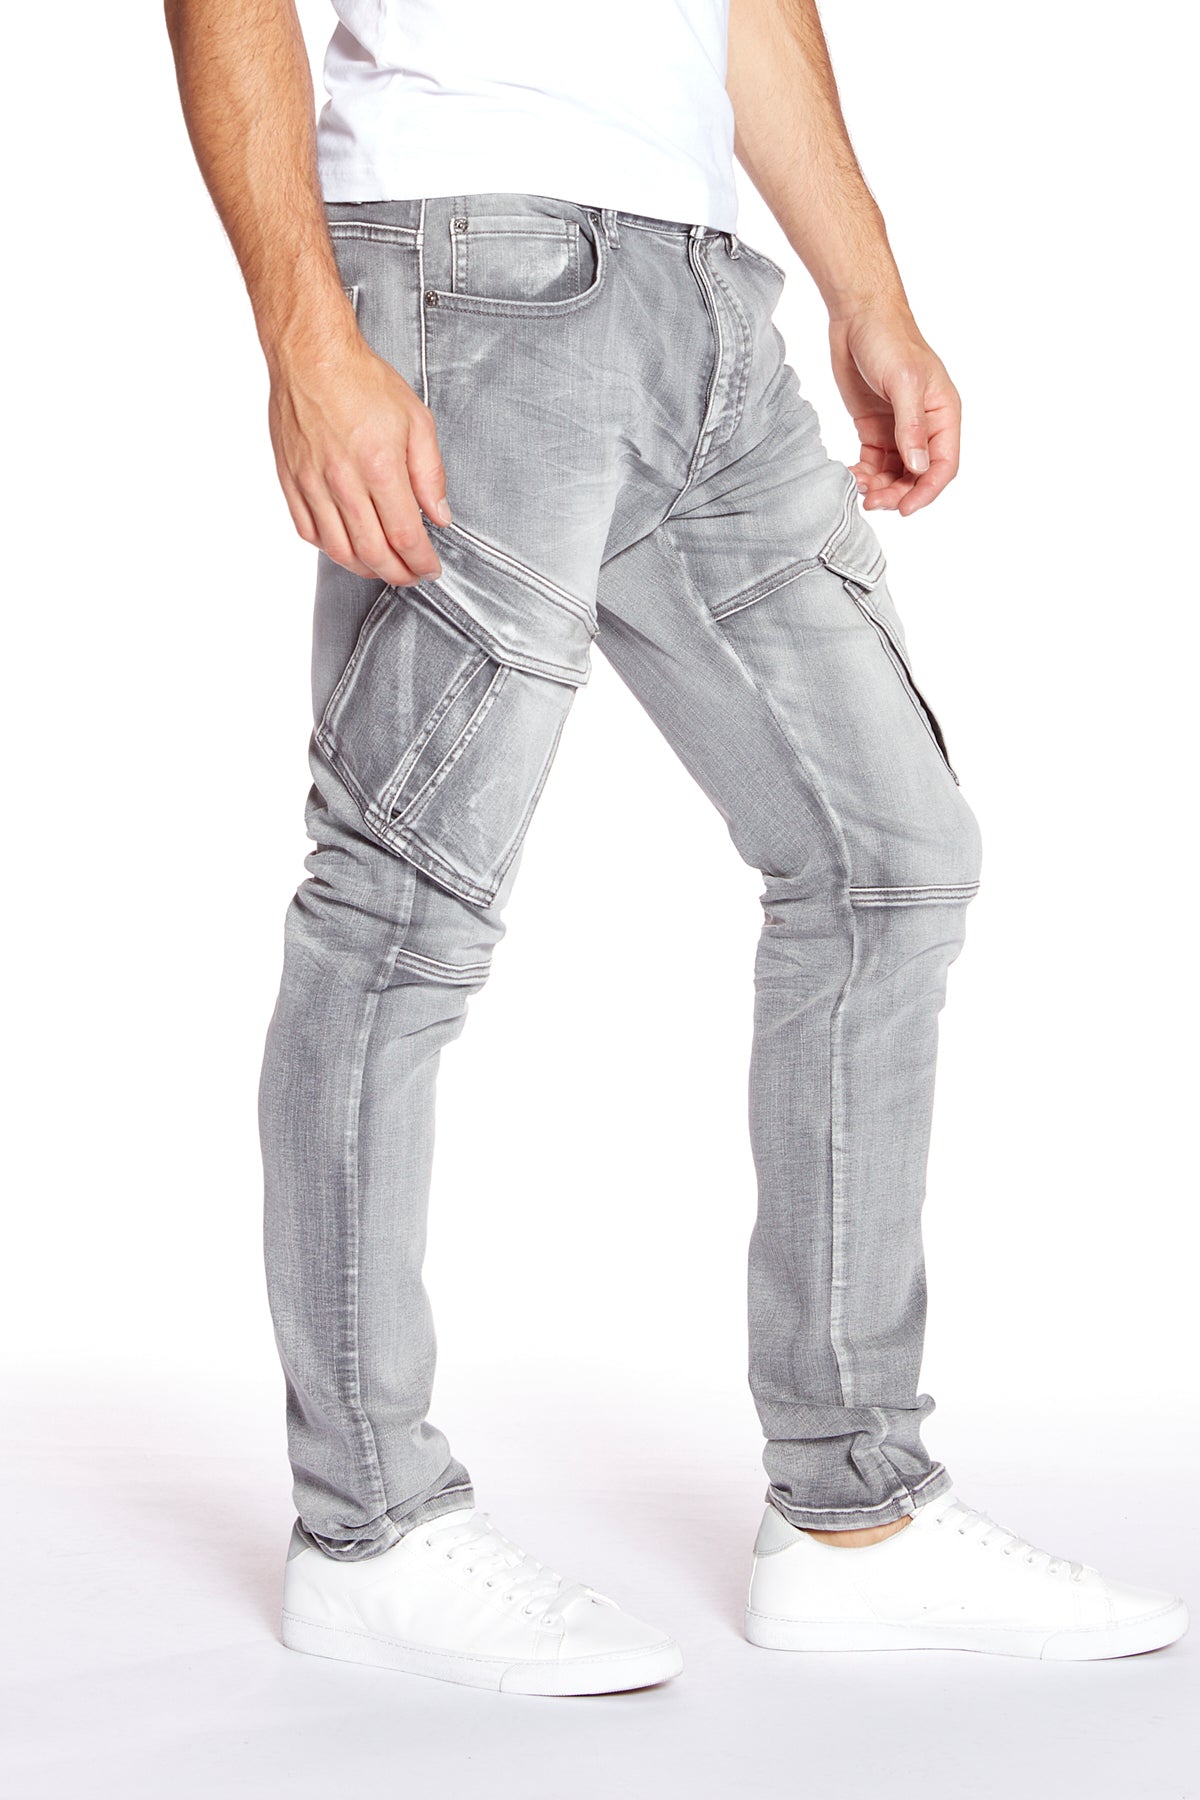 5 Pocket Slim Fit Jeans - Light Grey Wash - DENIM SOCIETY™